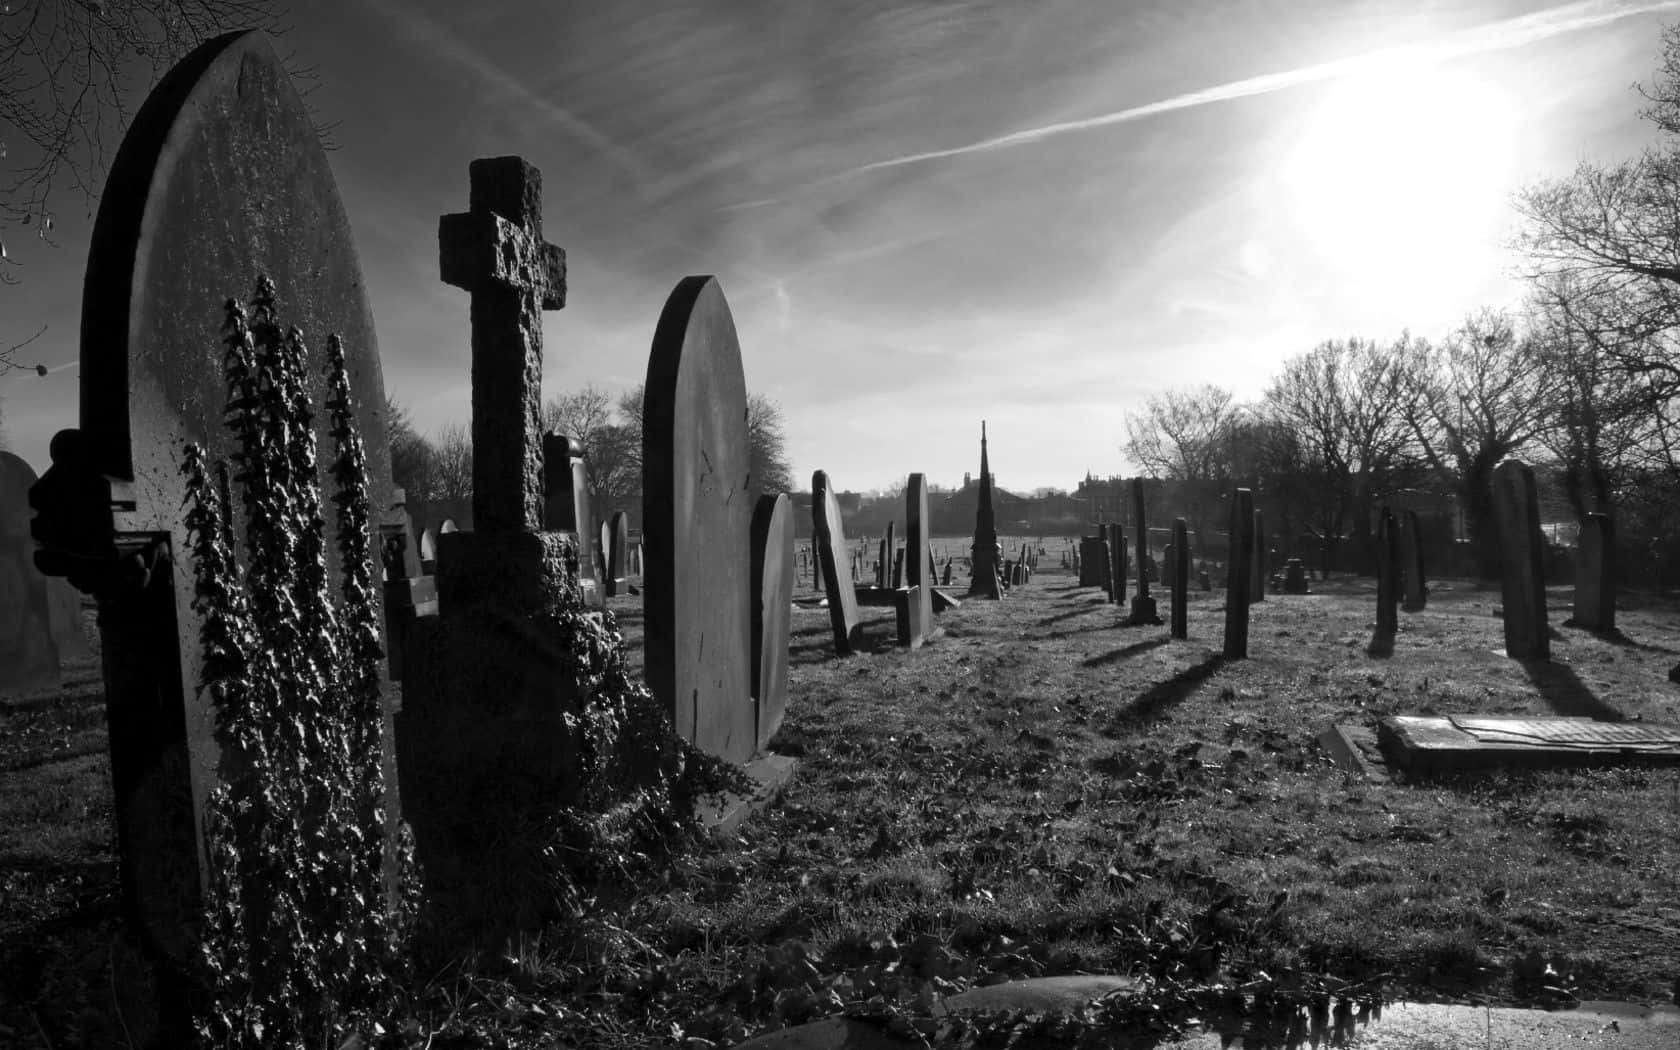 Moonlit Graveyard